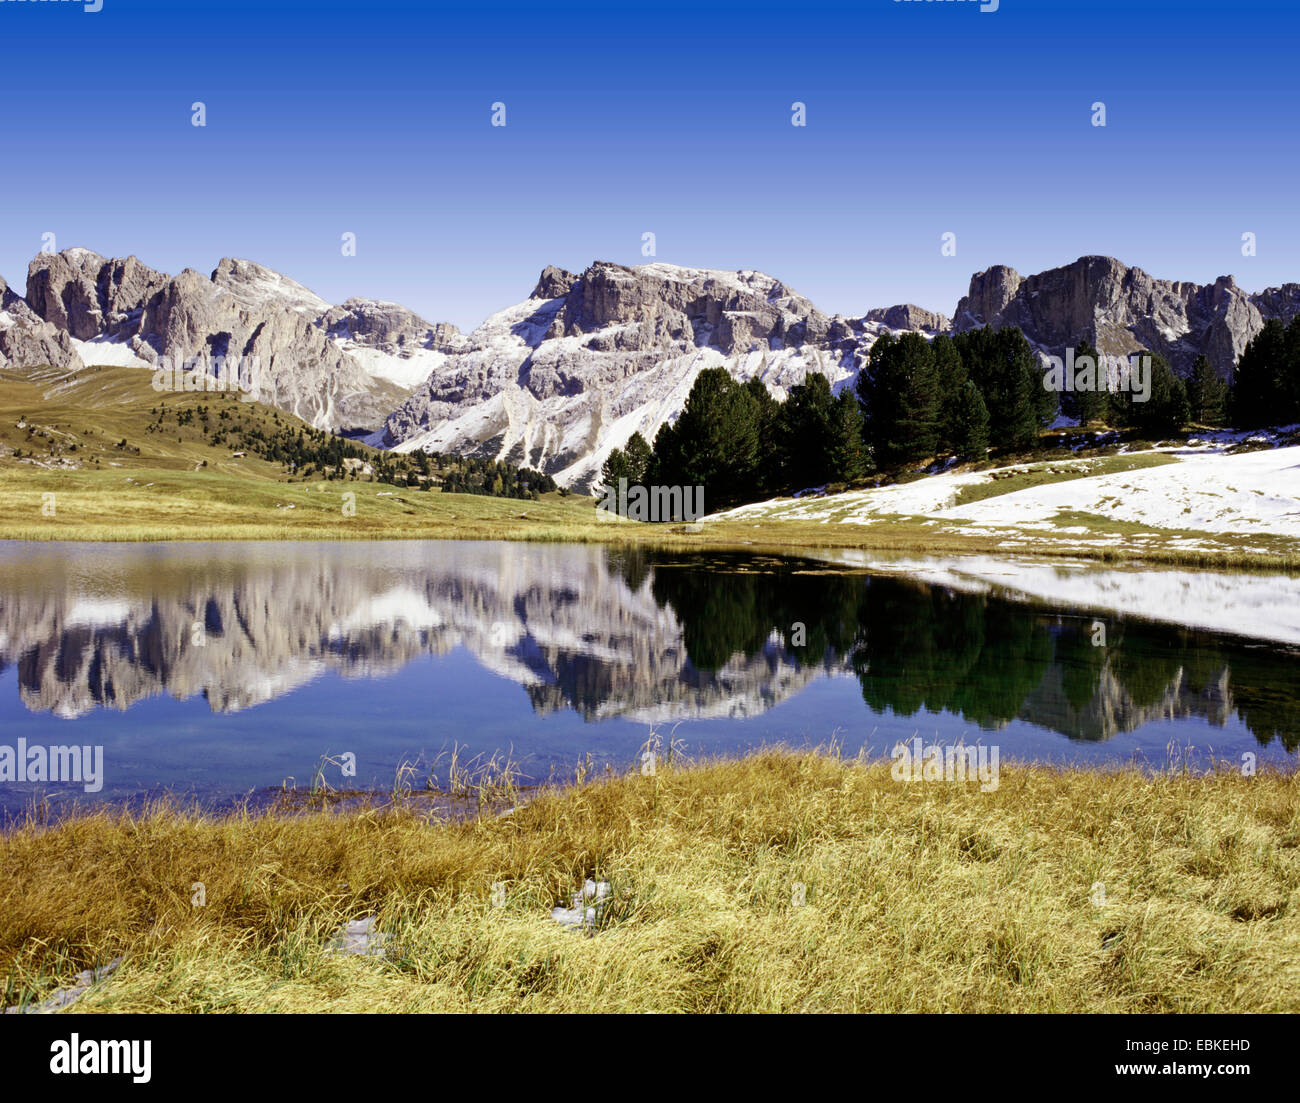 Geisler group reflecting in mountain lake, Italy, South Tyrol, Dolomites Stock Photo